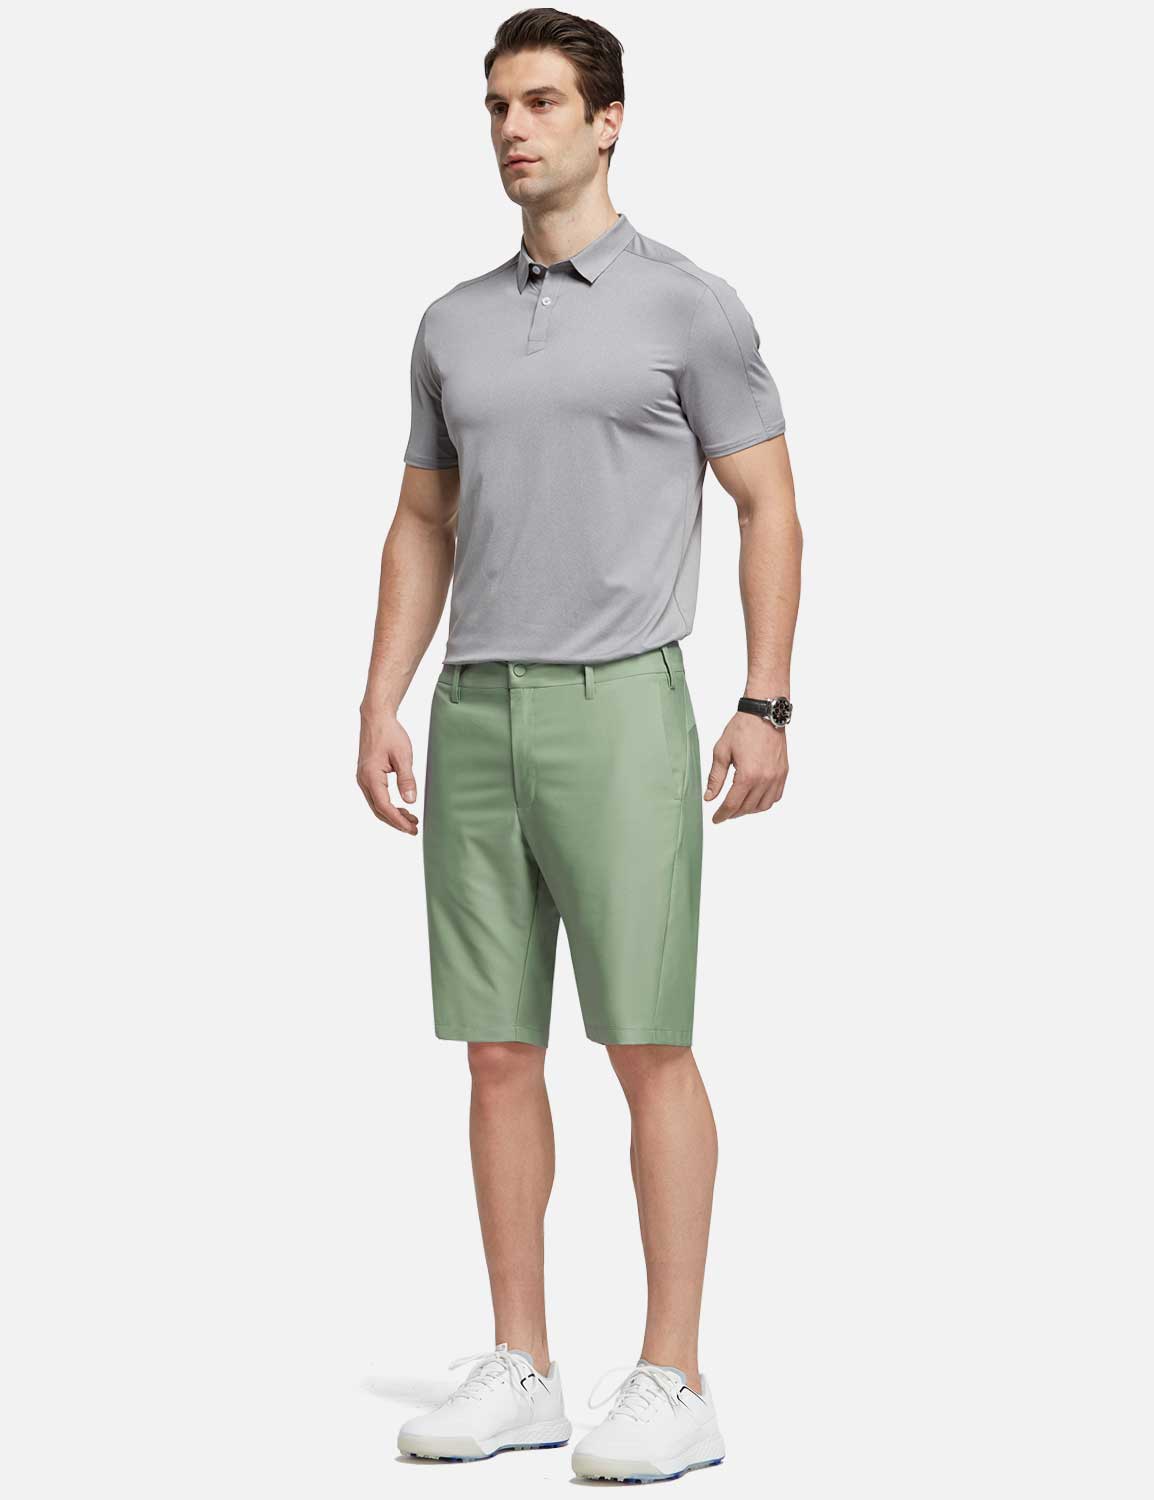 Baleaf Men's 10' UPF 50+ Lightweight Golf Shorts w Zipper Pockets cga005 Green Full